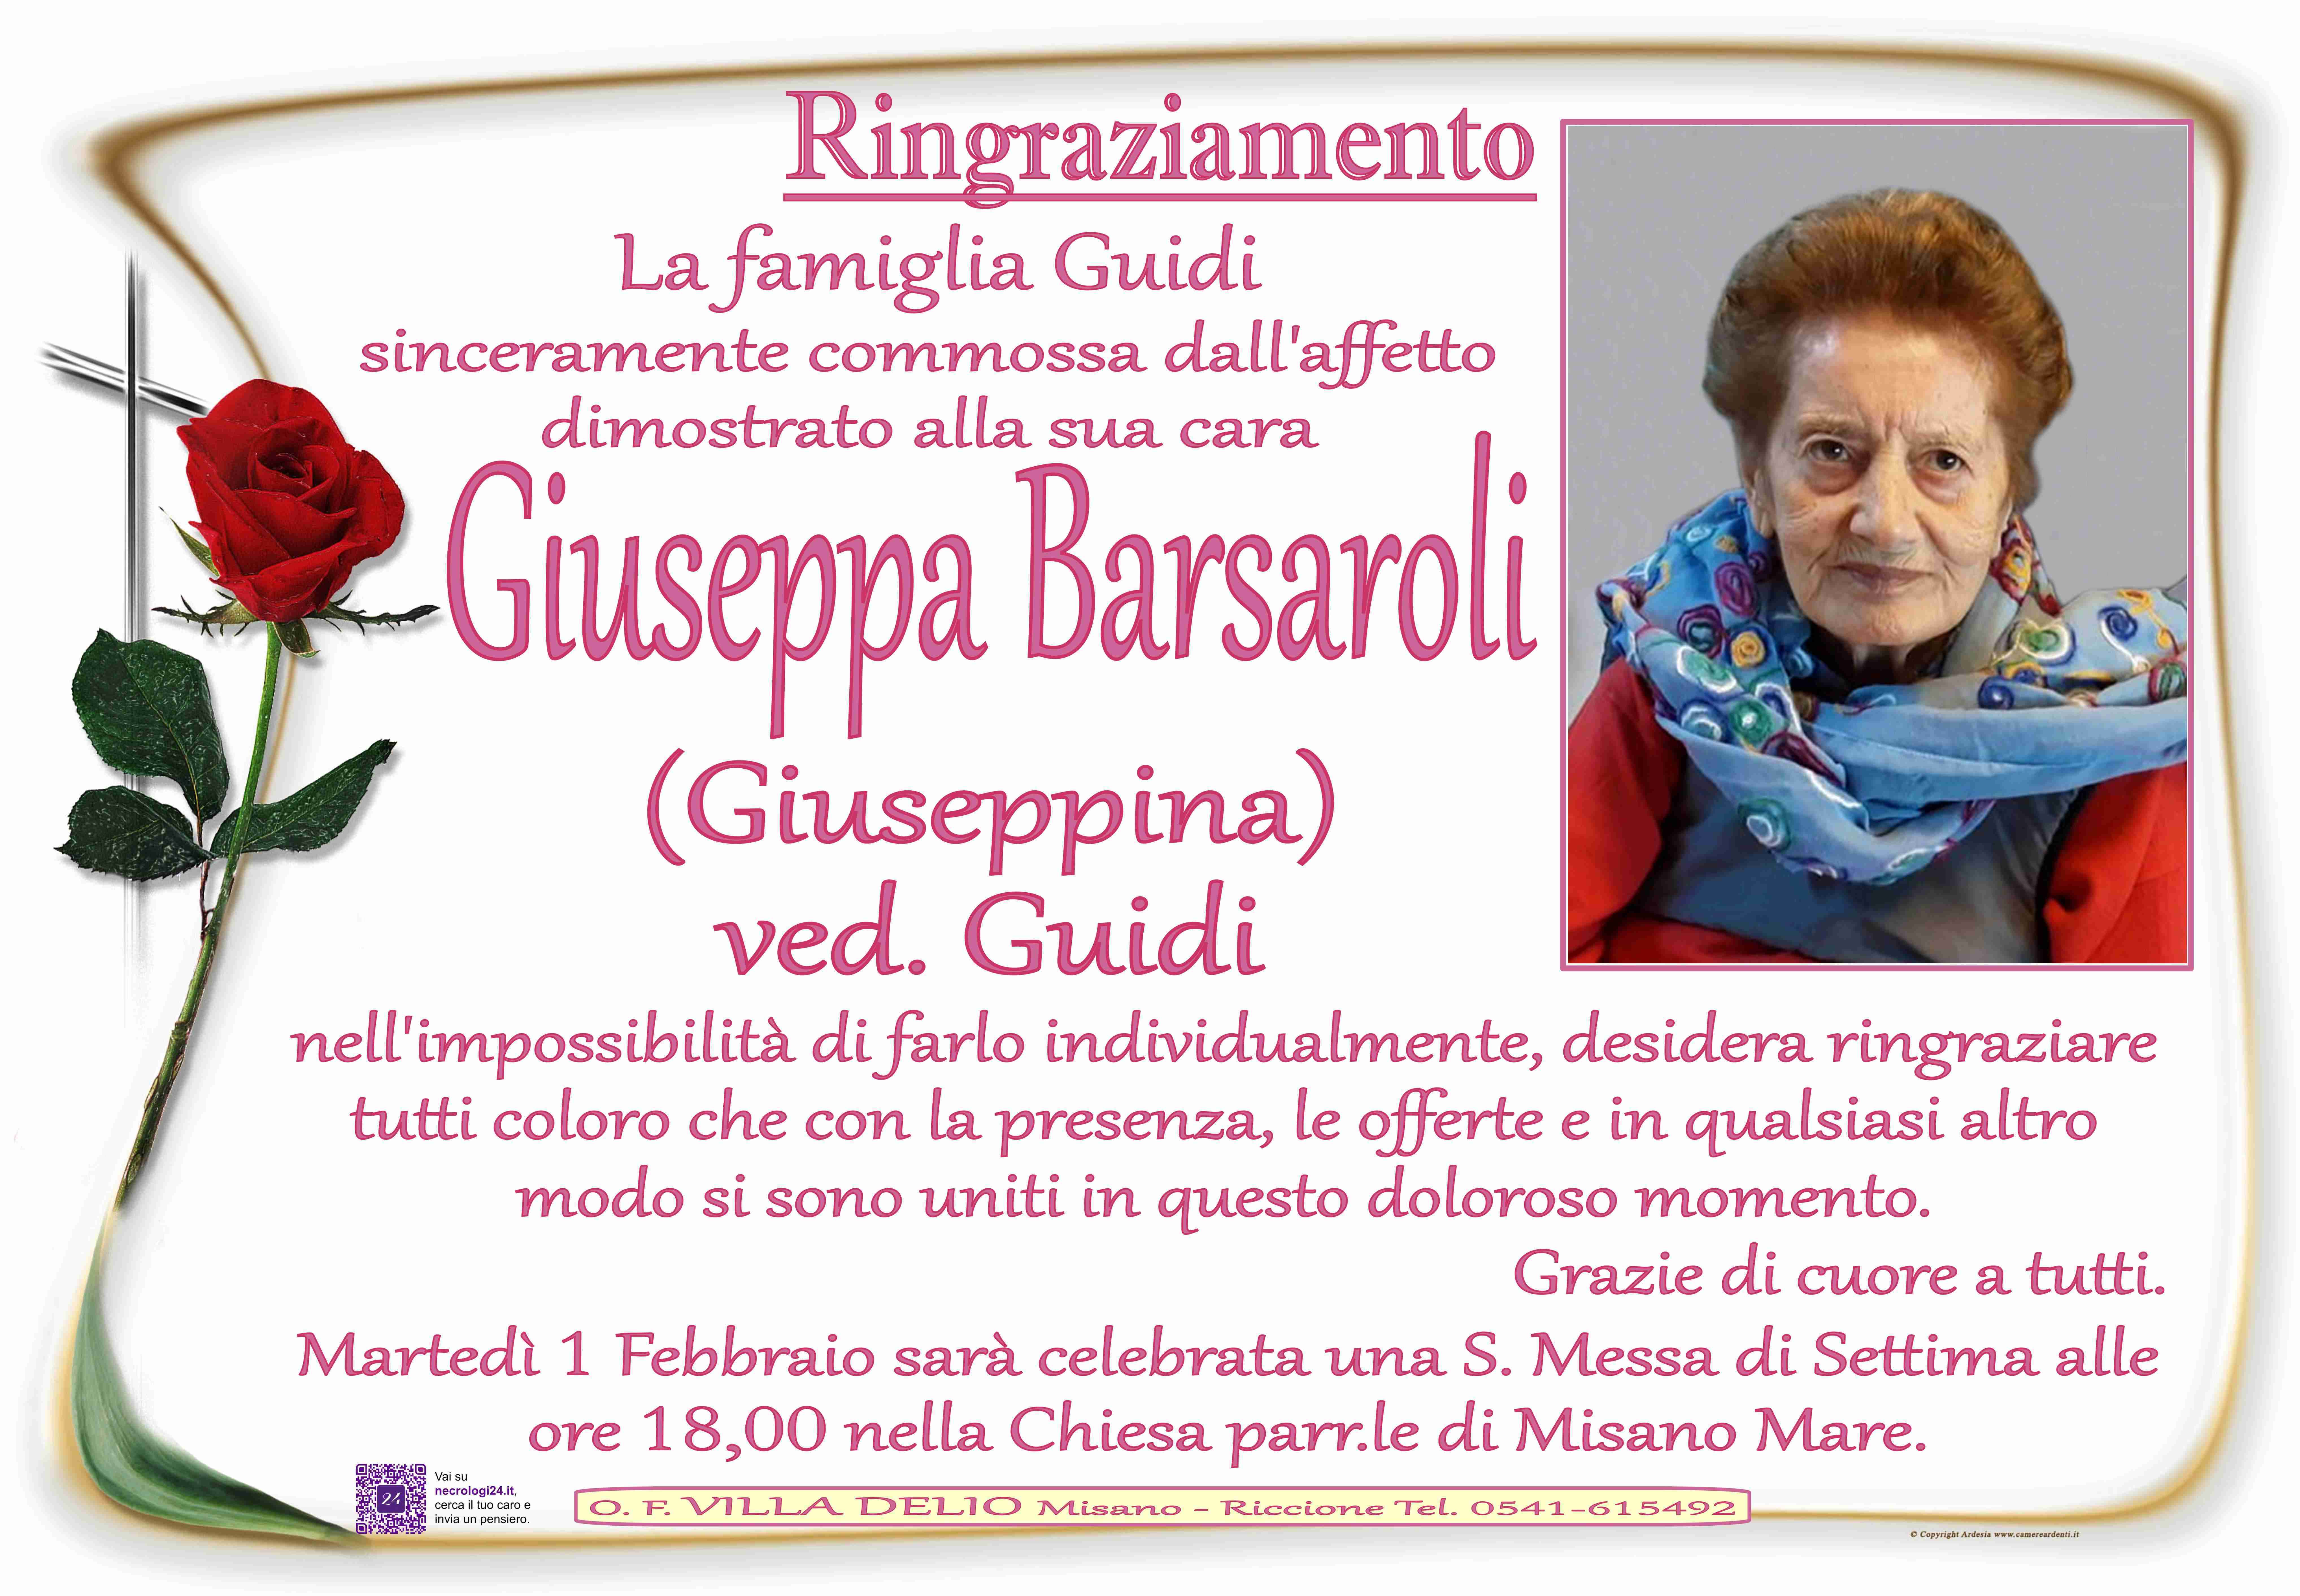 Giuseppa Barsaroli